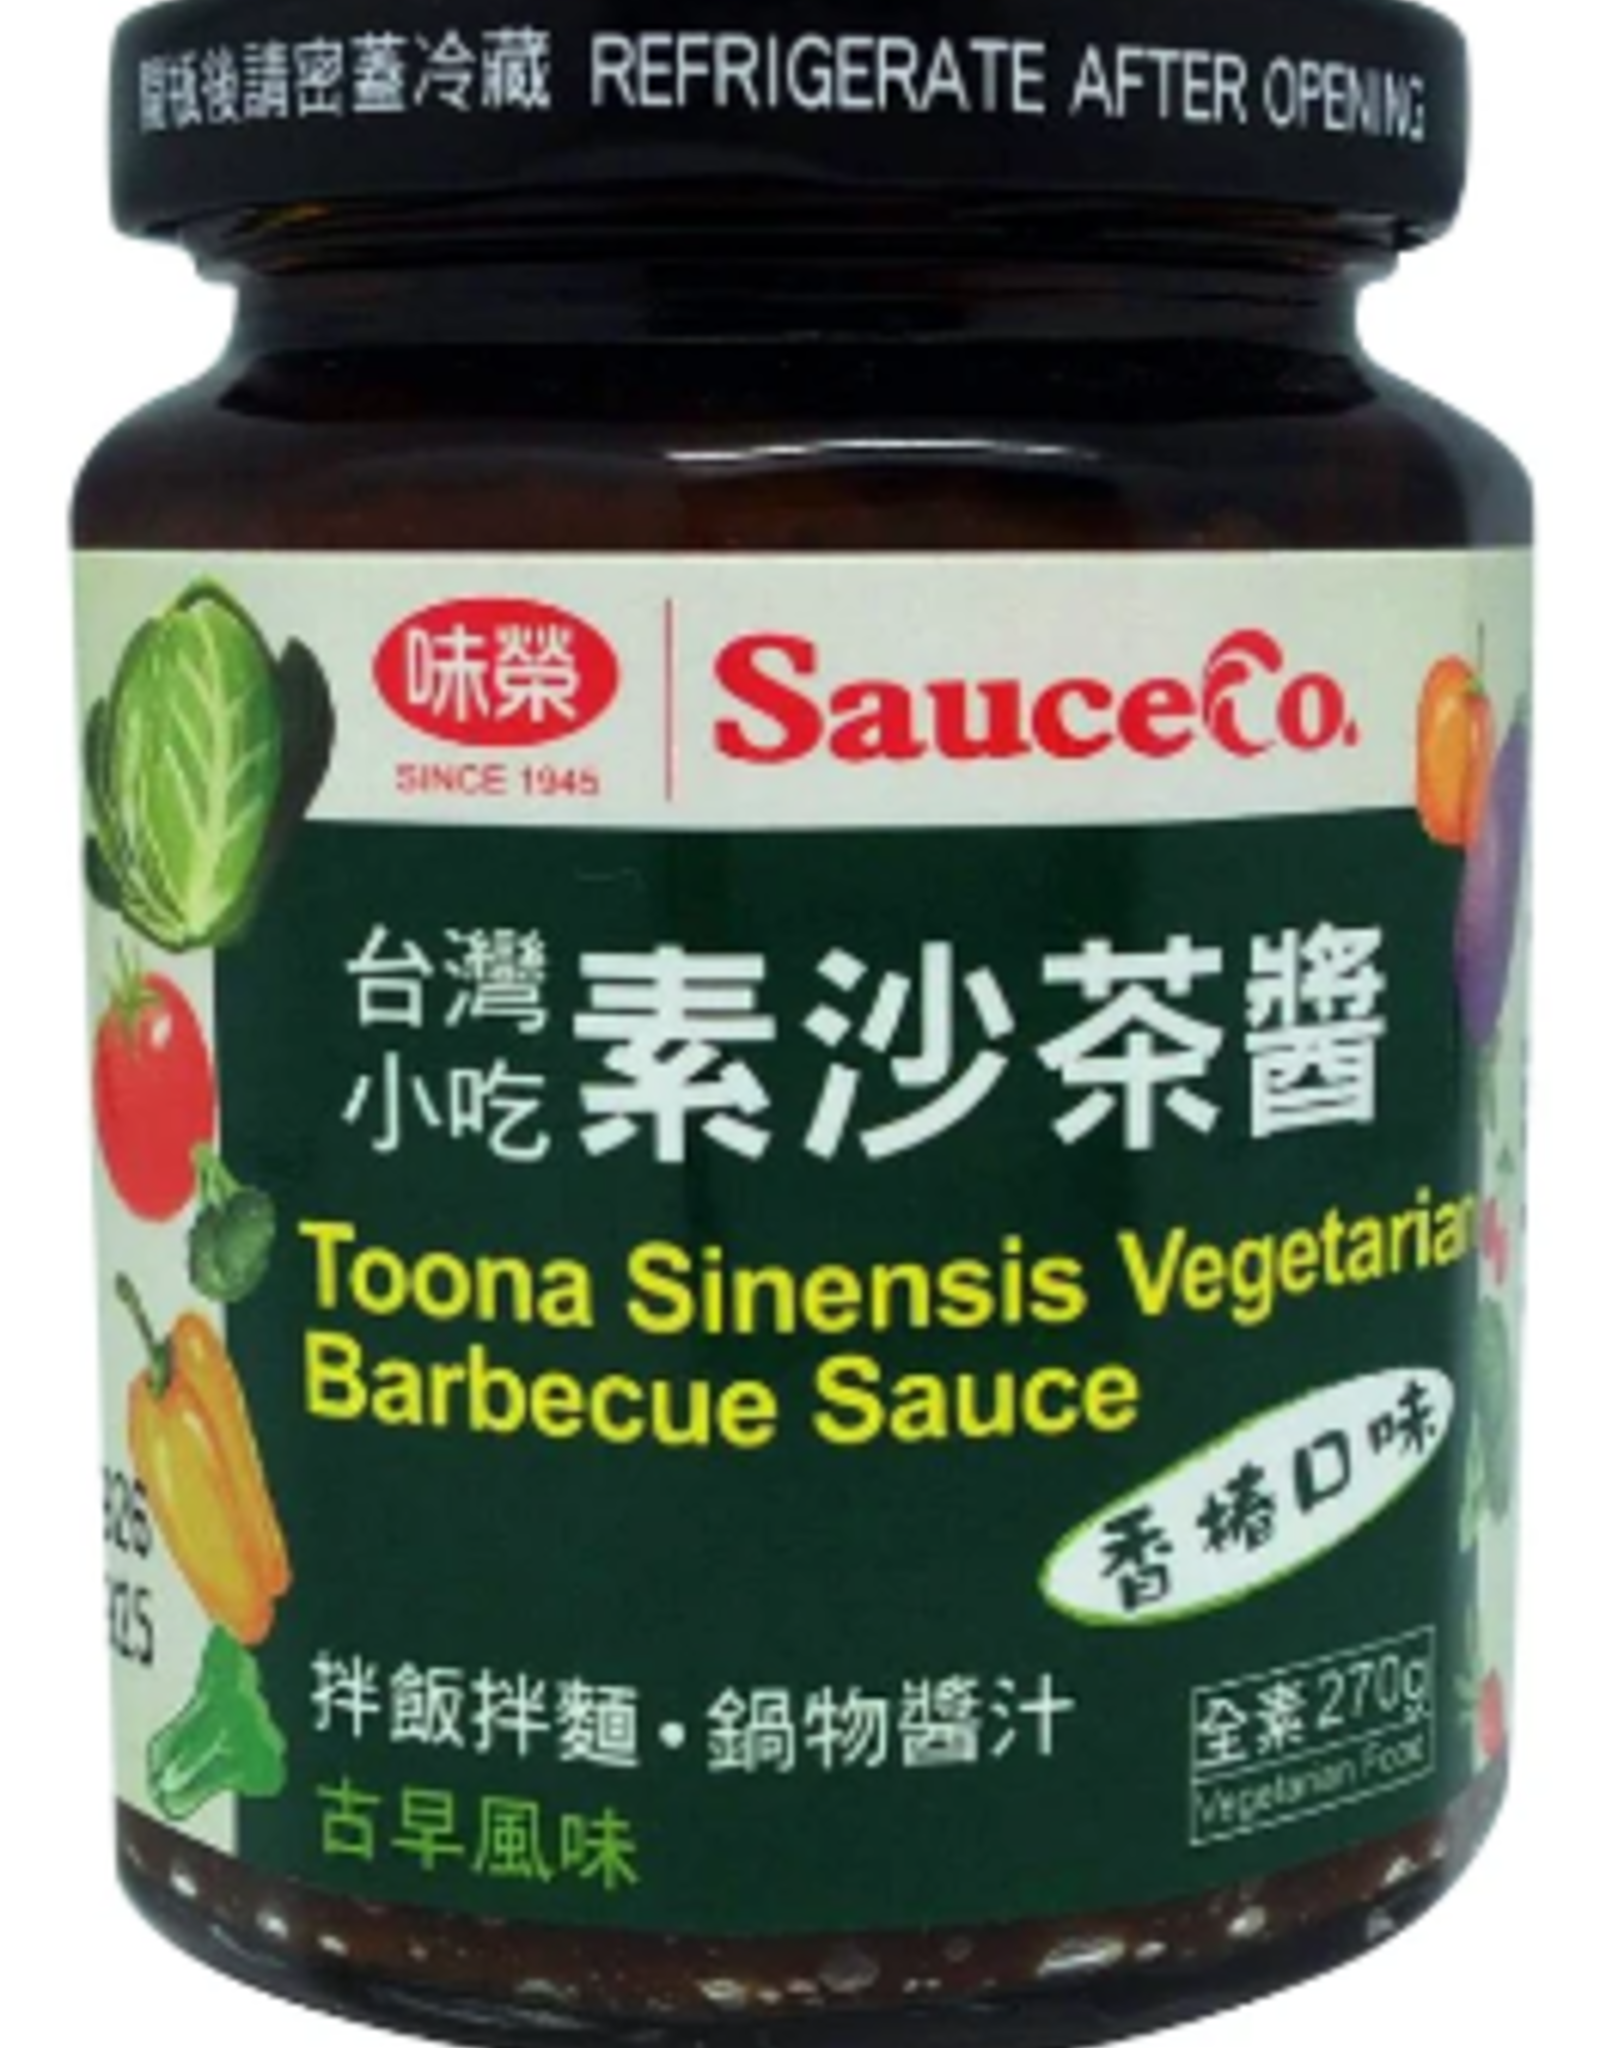 (UK) Vegan SauceCo Natural Toona Sinensis Vege BBQ Sauce*(味榮) 素沙茶醬 (香椿)